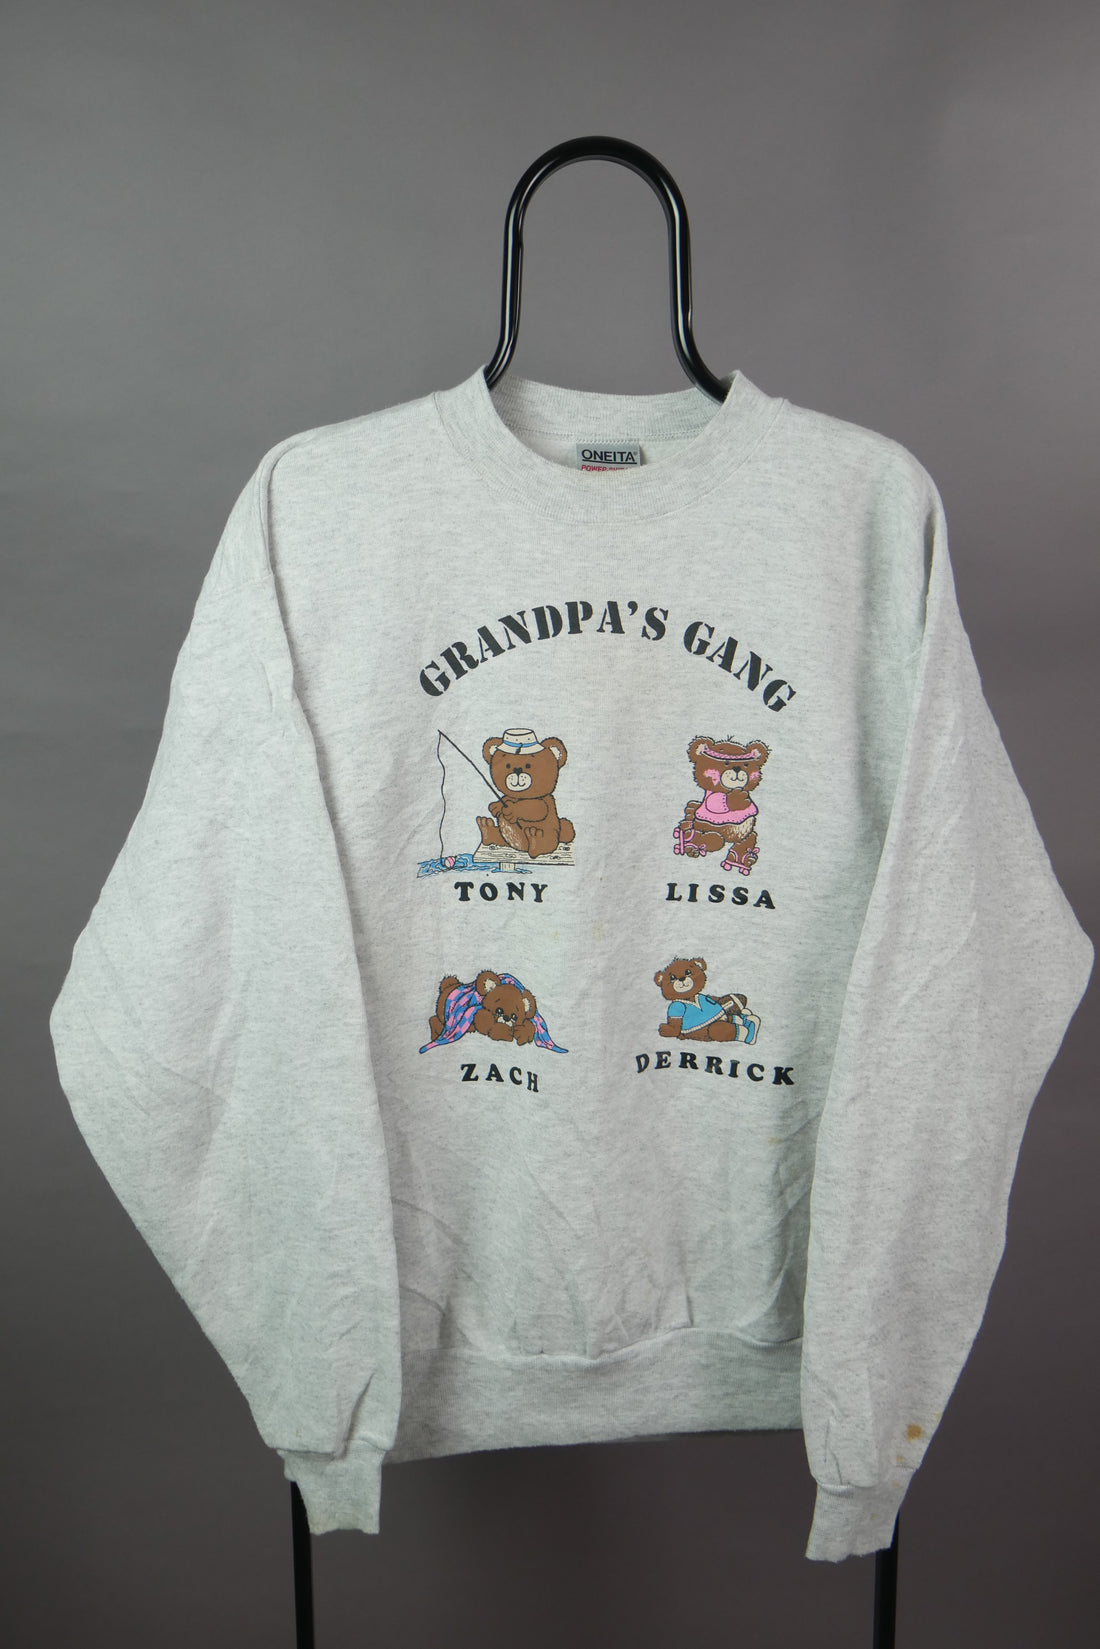 The Grandpas Gang Graphic Sweatshirt (XL)